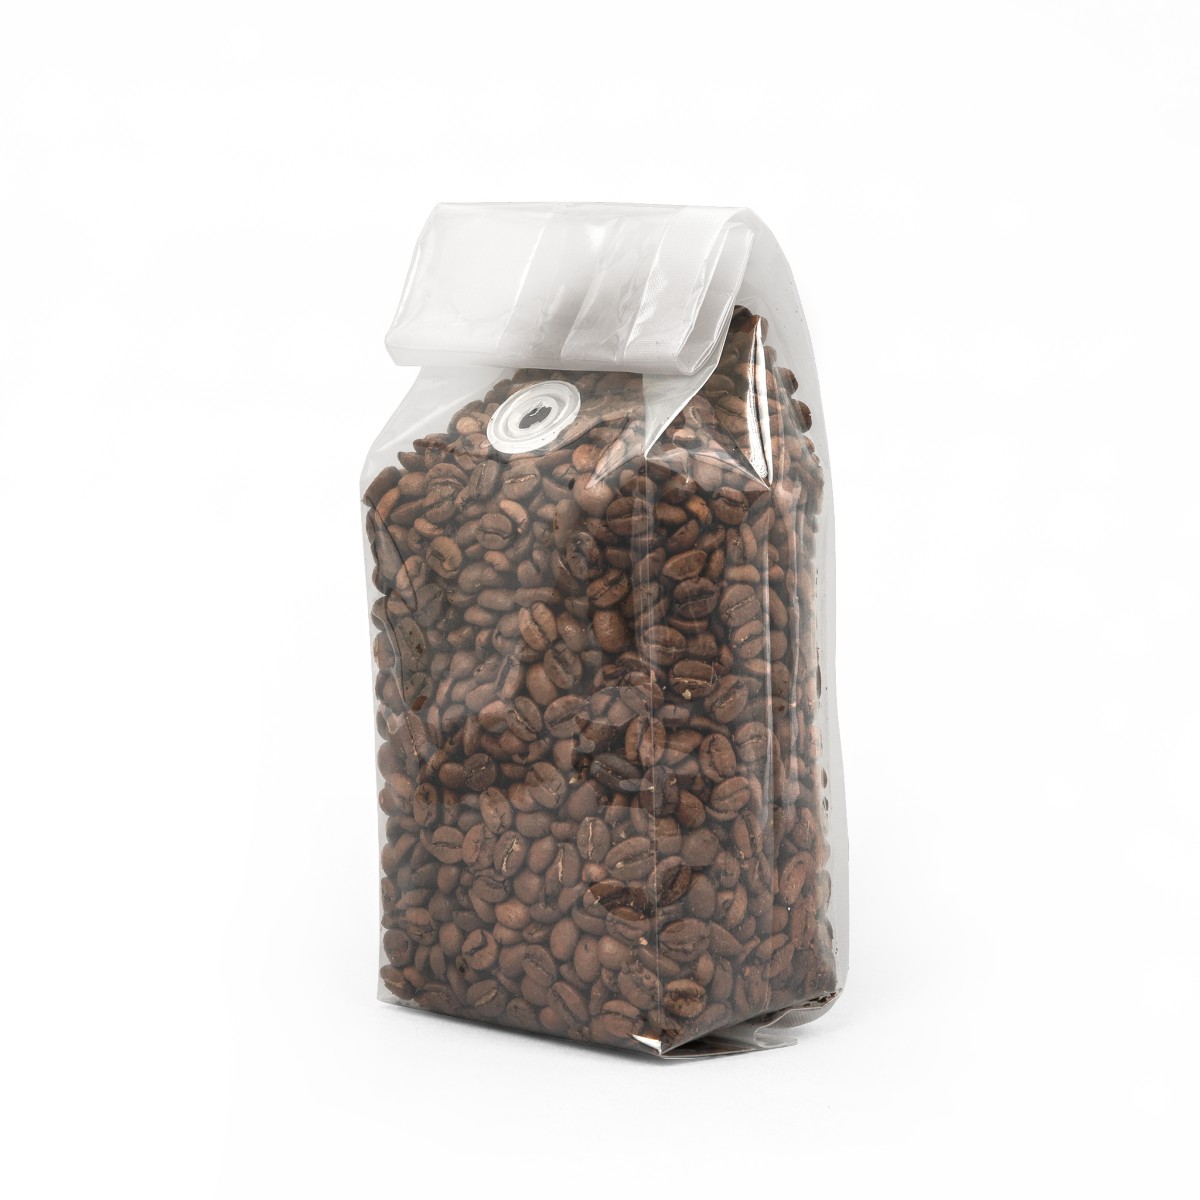 "The Cascades" Coffee Blend from Premium 81# Coffee Reserve (Medium-Dark Roast) product thumbnail image